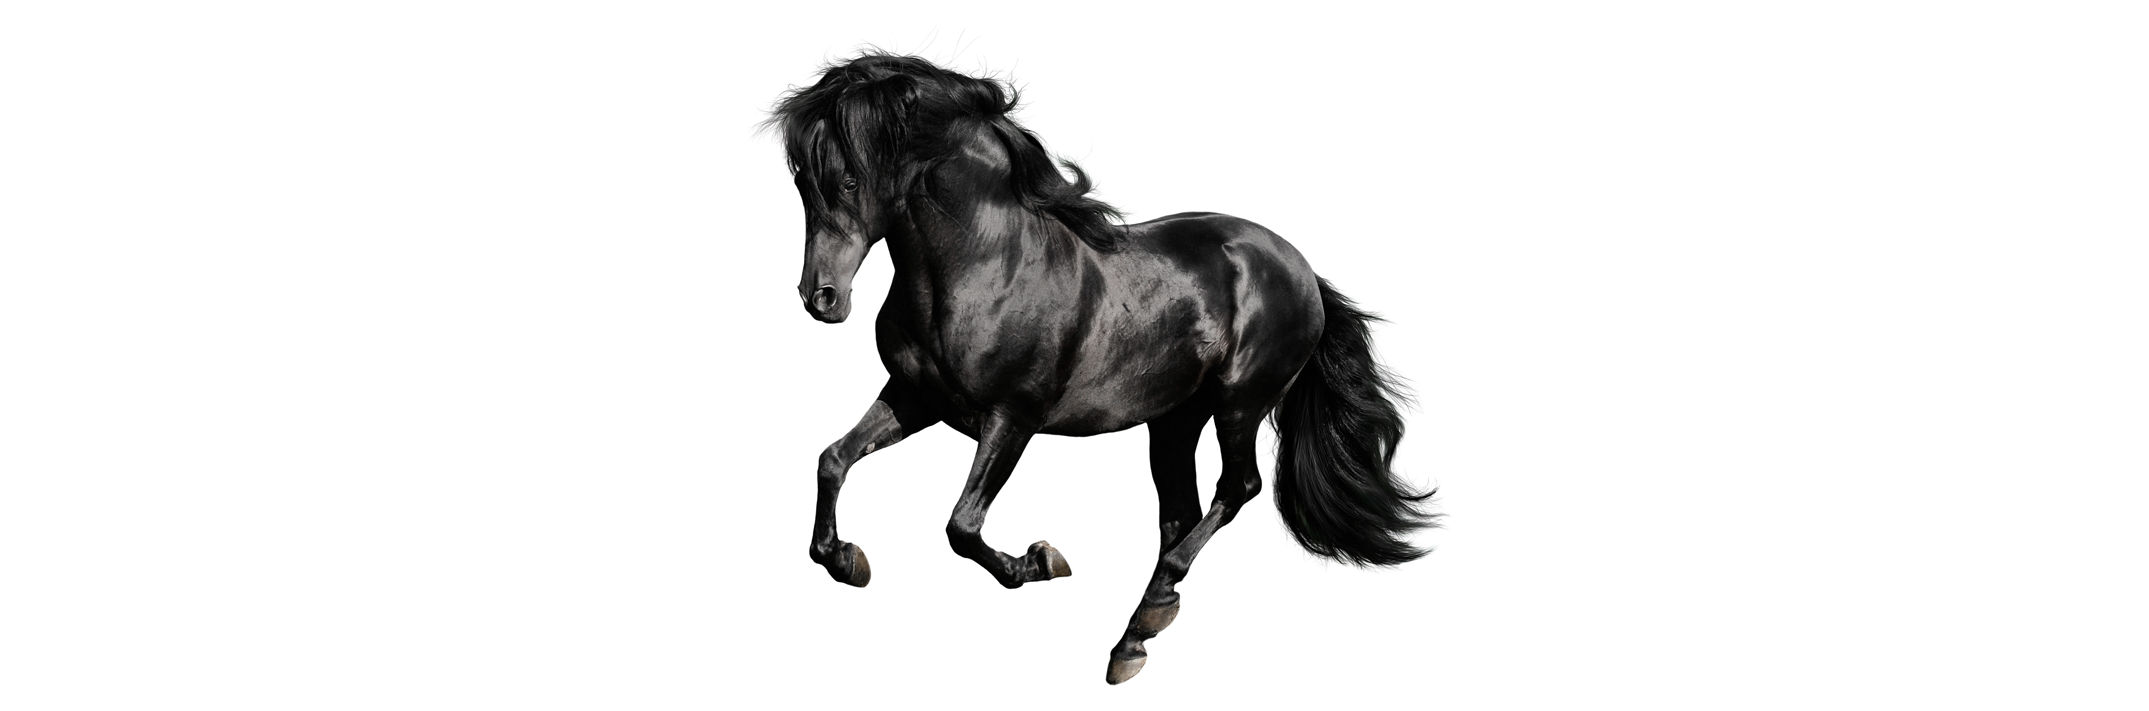 Black horse galloping